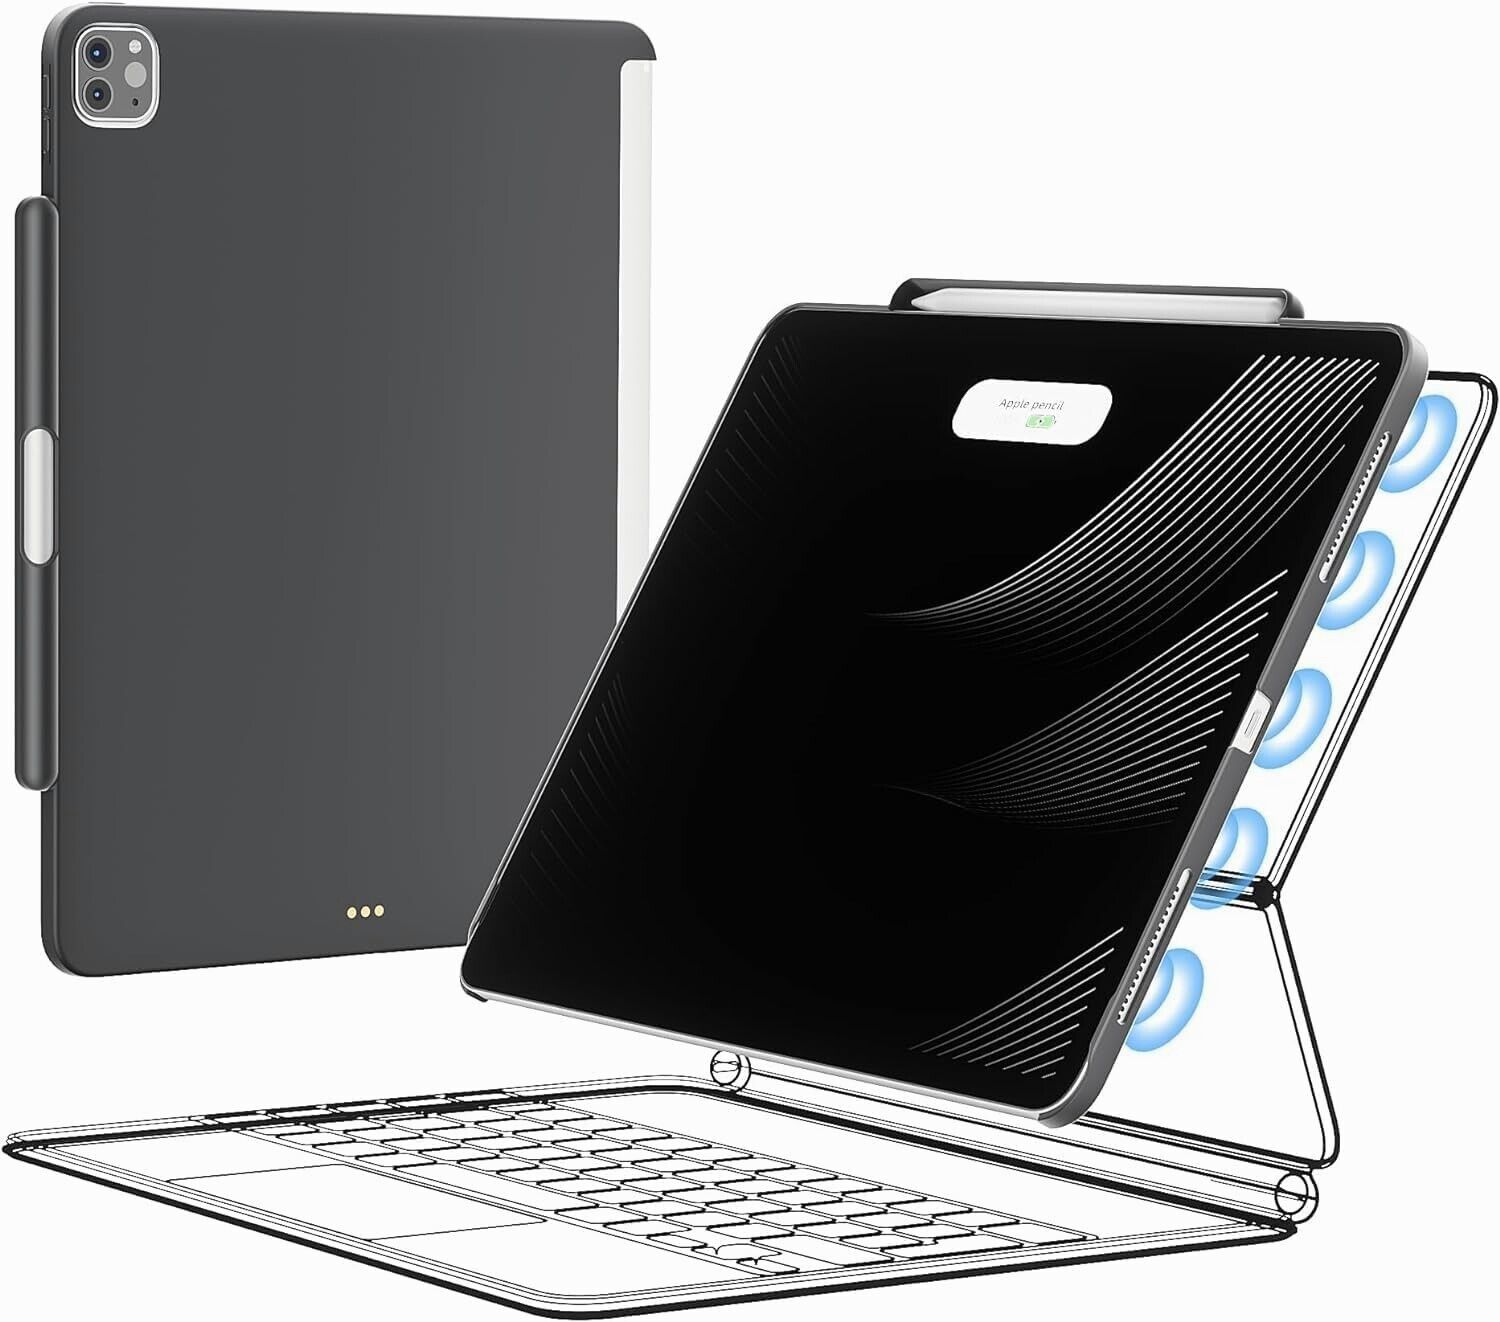 iPad Pro Case 12.9 inch Compatible with Magic Keyboard & Smart Keyboard Folio